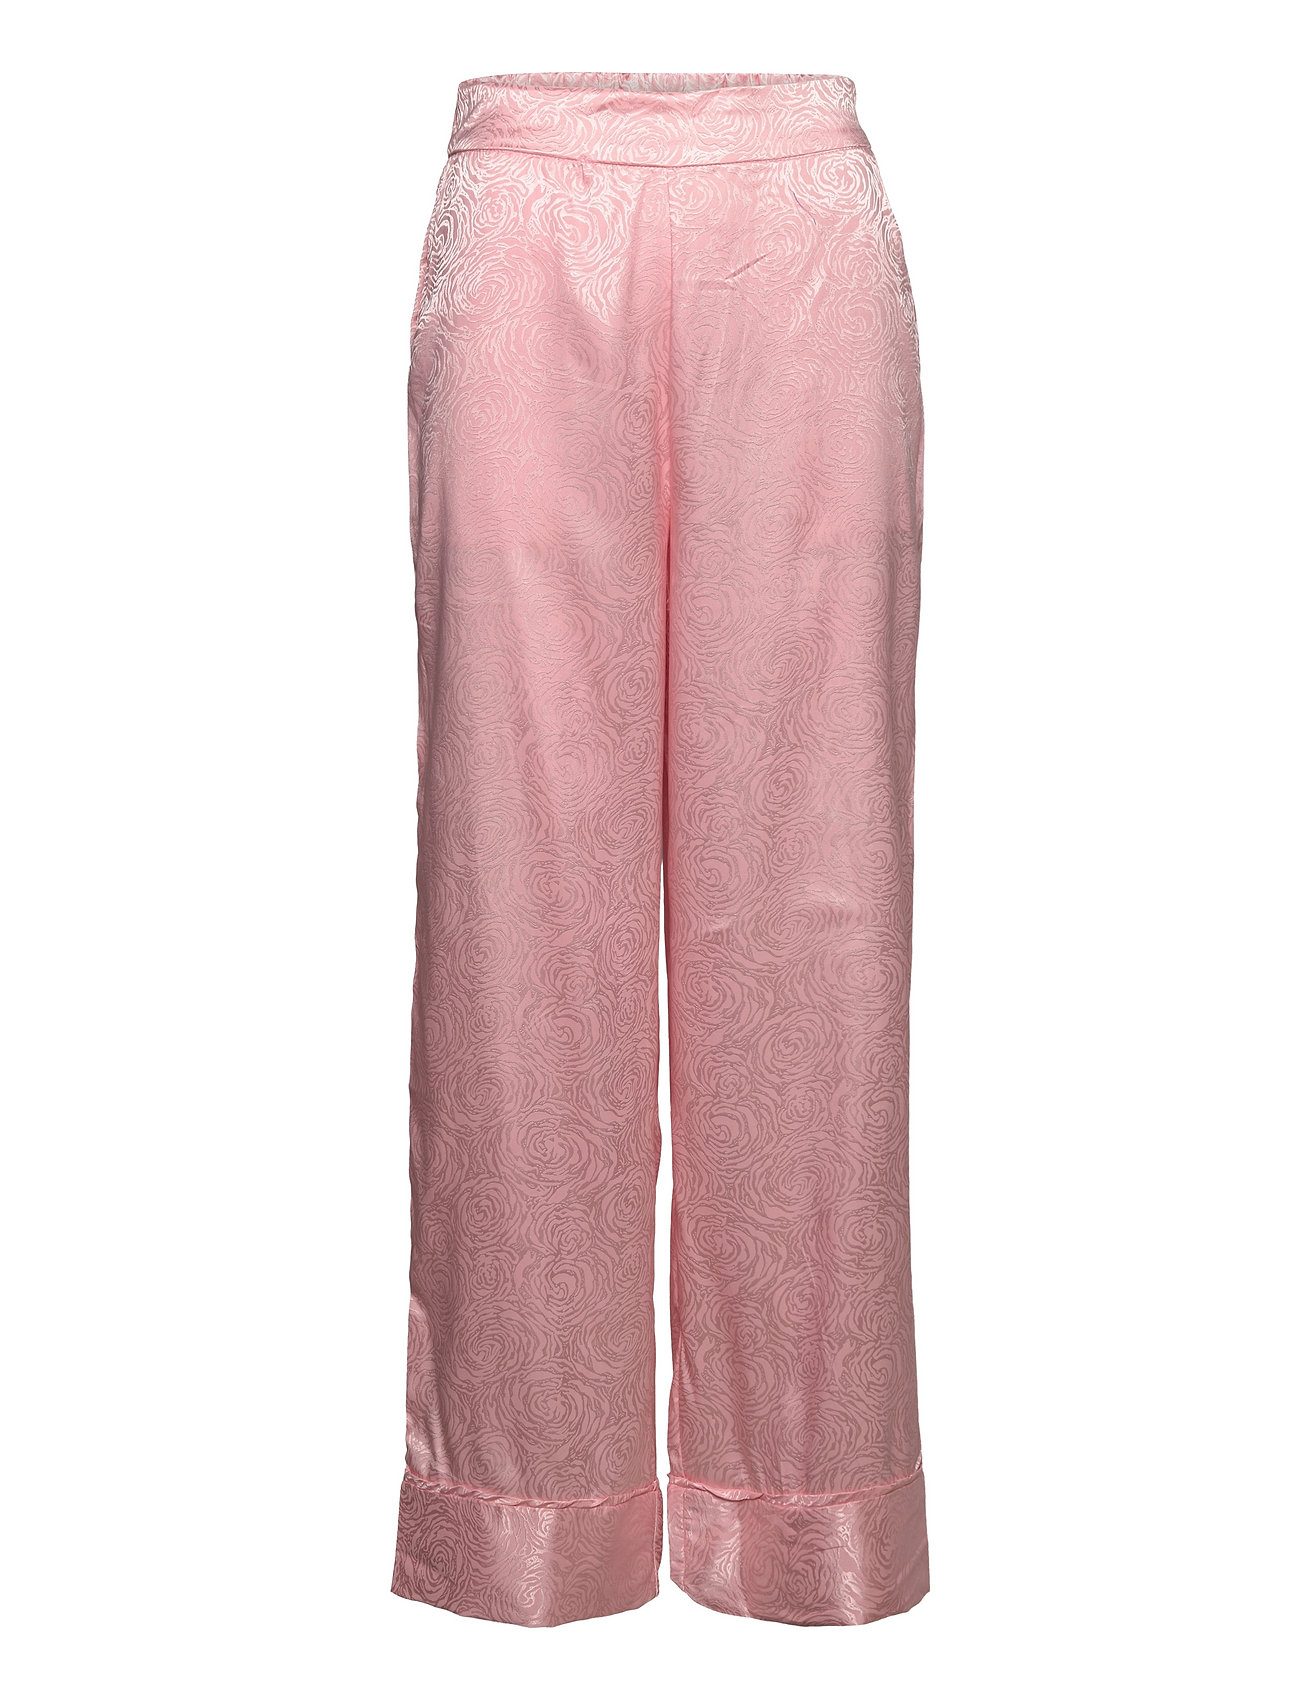 Objaileen Hw Wide Pant A Ss Fair 22 C. Bottoms Trousers Wide Leg Pink Object